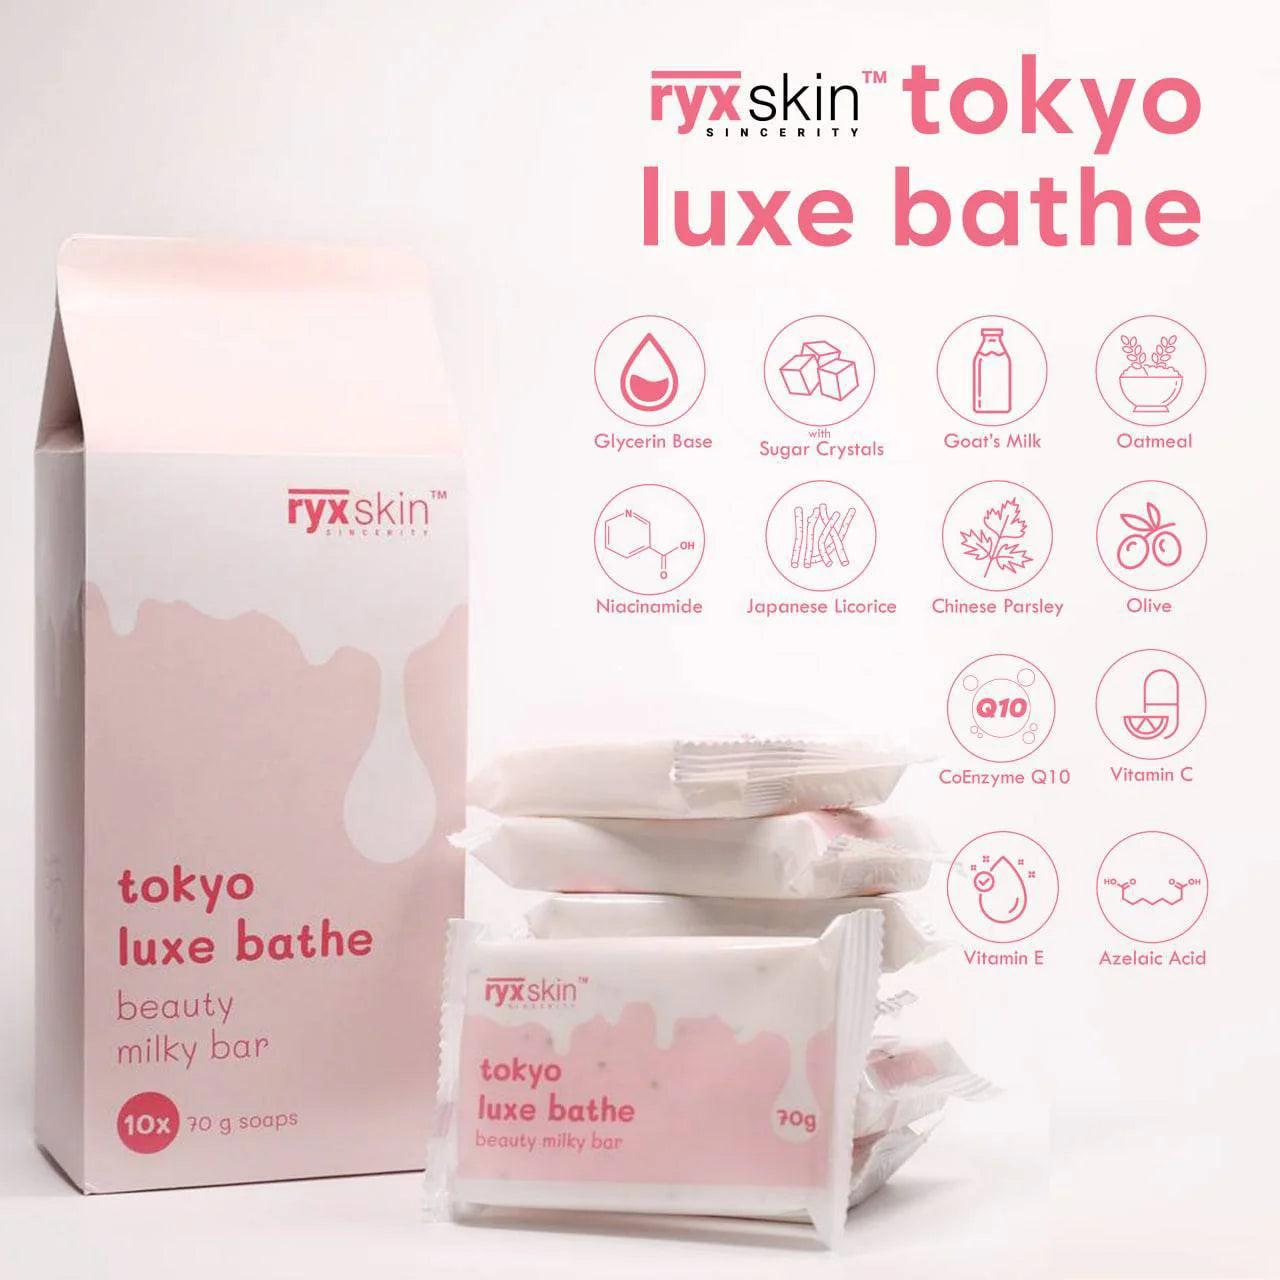 Tokyo Luxe Bathe (Beauty Milk Bar)